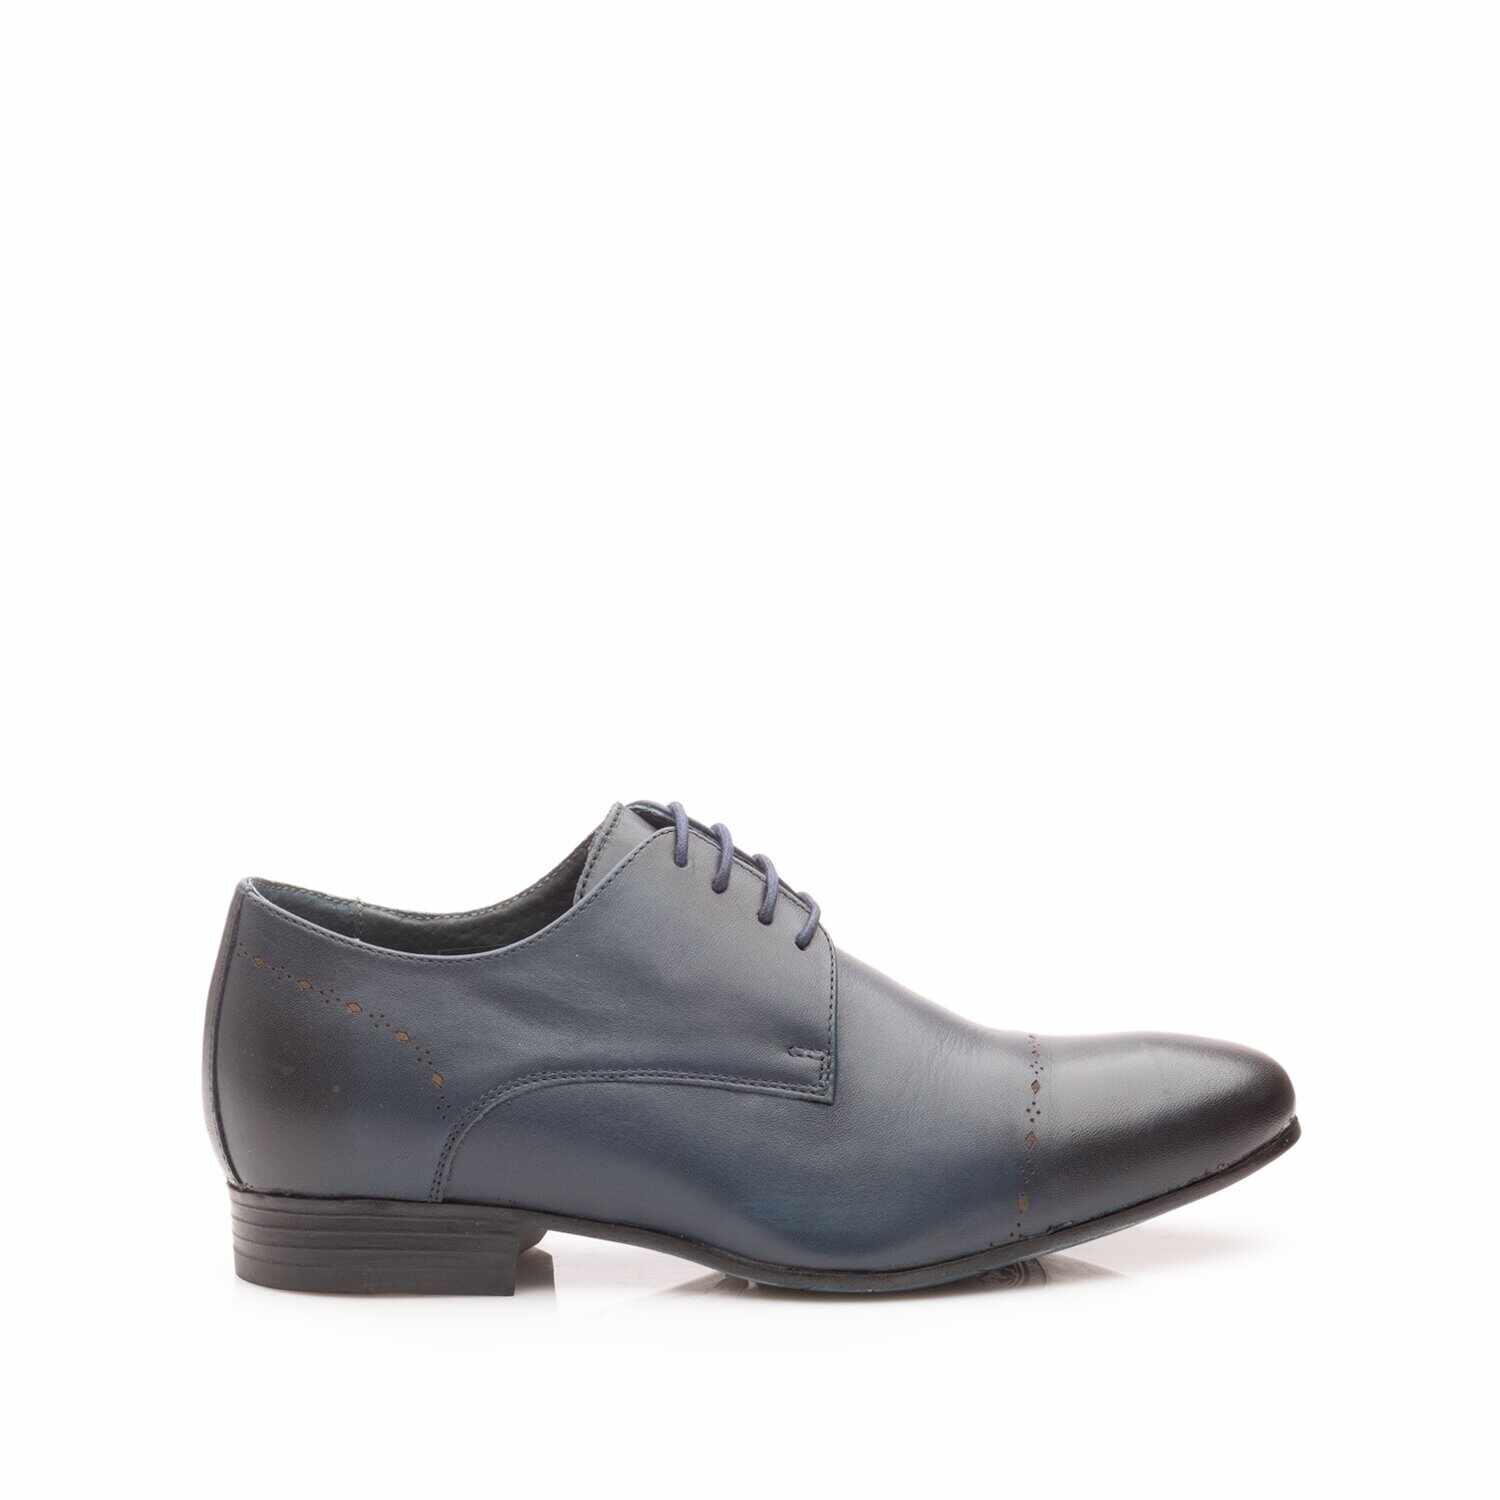 Pantofi eleganti barbati din piele naturala,Leofex - 892 blue box